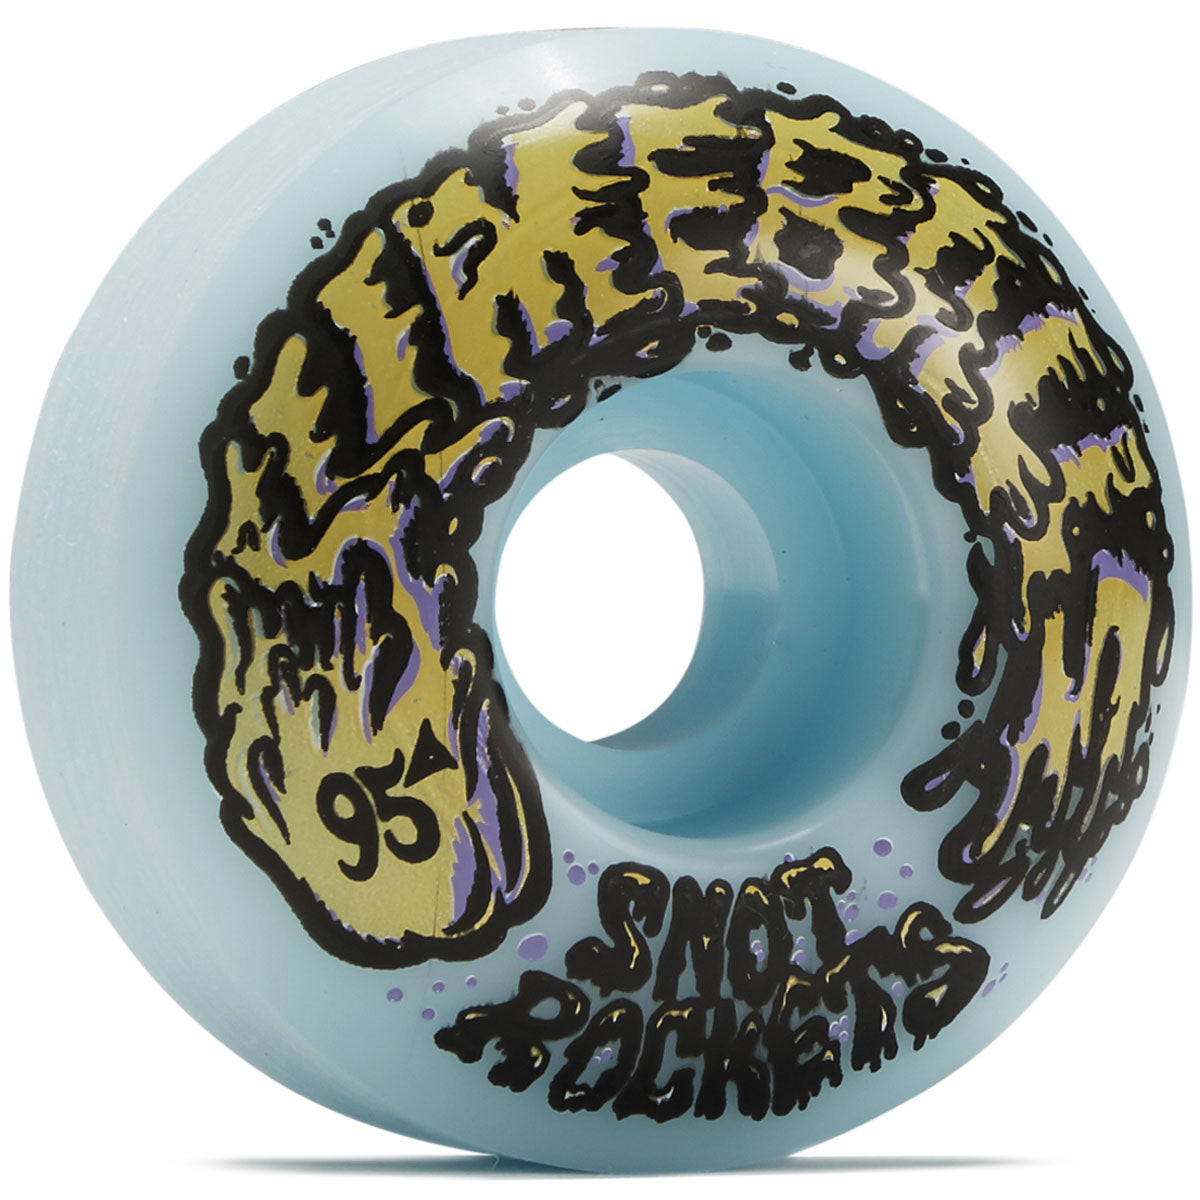 Slime Balls Snot Rockets 95a Skateboard Wheels - Pastel Blue - 53mm image 1